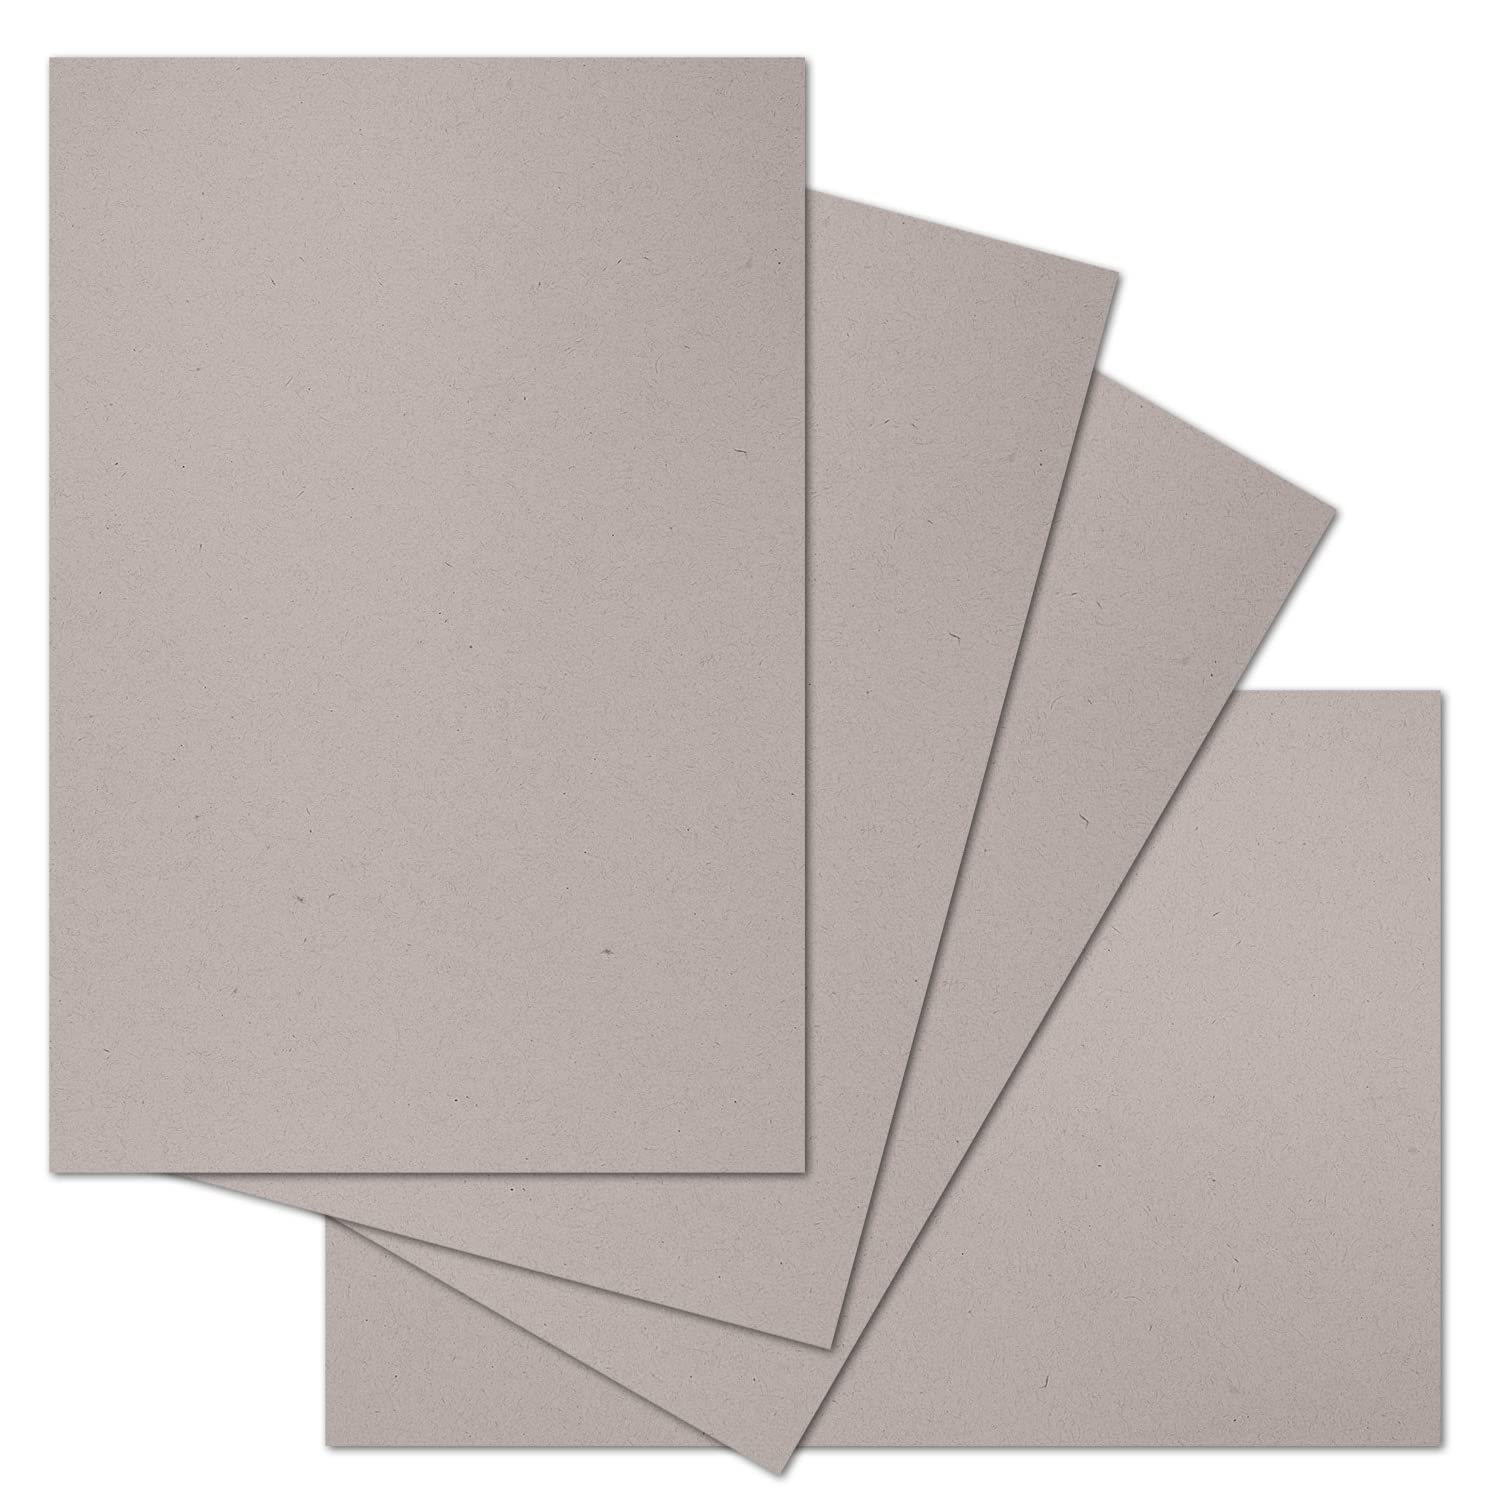 ARTOZ 50x Bastelkarte DIN A4 - Farbe: beech (hellgrau / hellbraun) - 21 x 29,7 cm - 216 g/m² - Einzelkarte ohne Falz - dickes Bastelpapier - Serie Green-Line